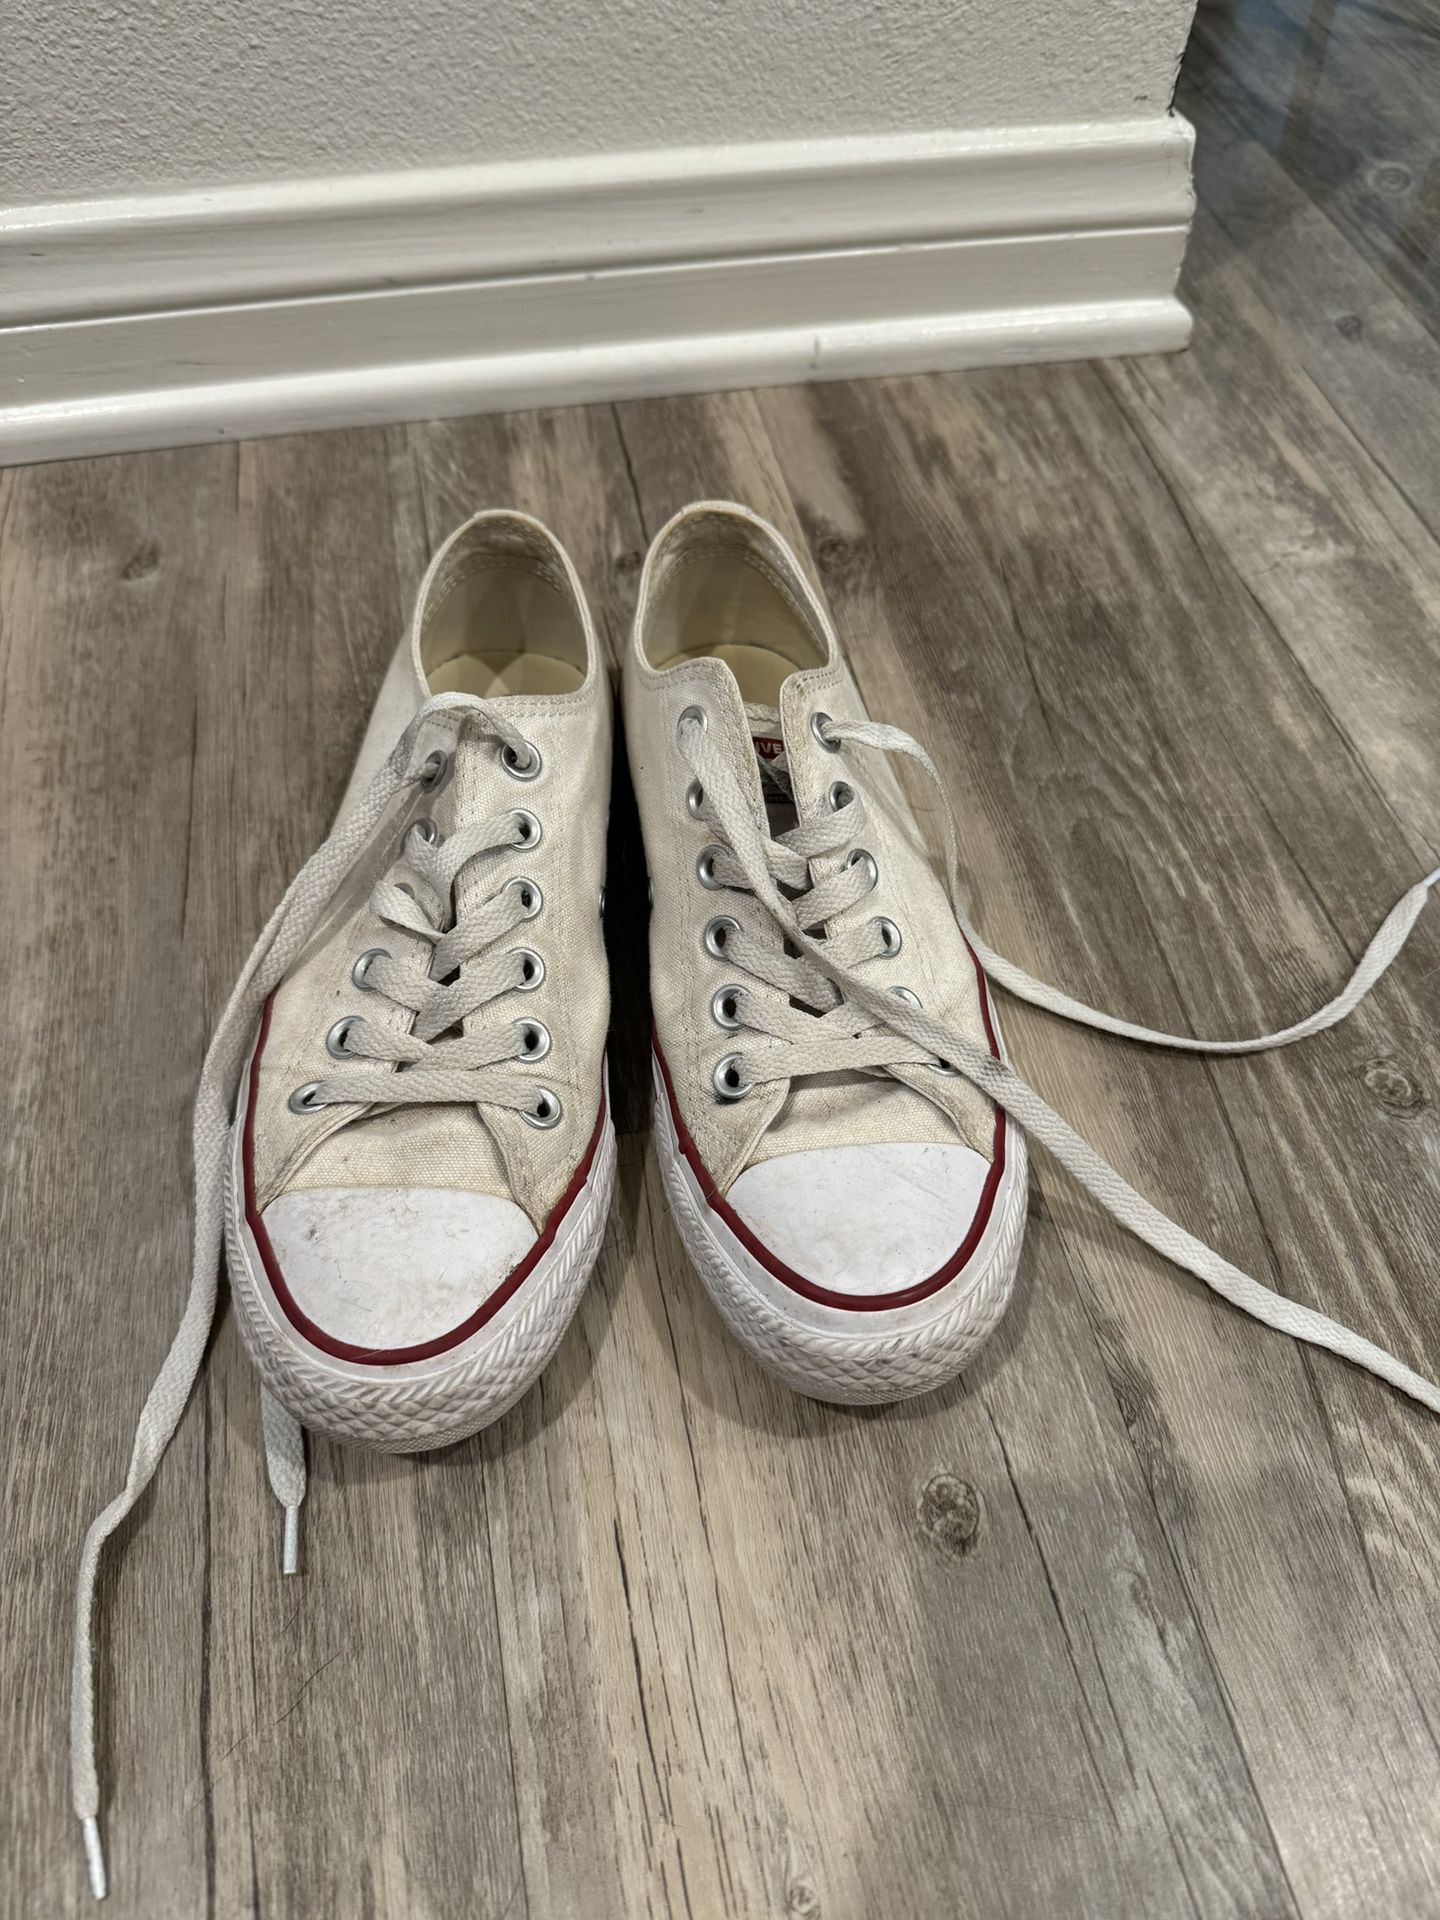 White Converse, Size 7